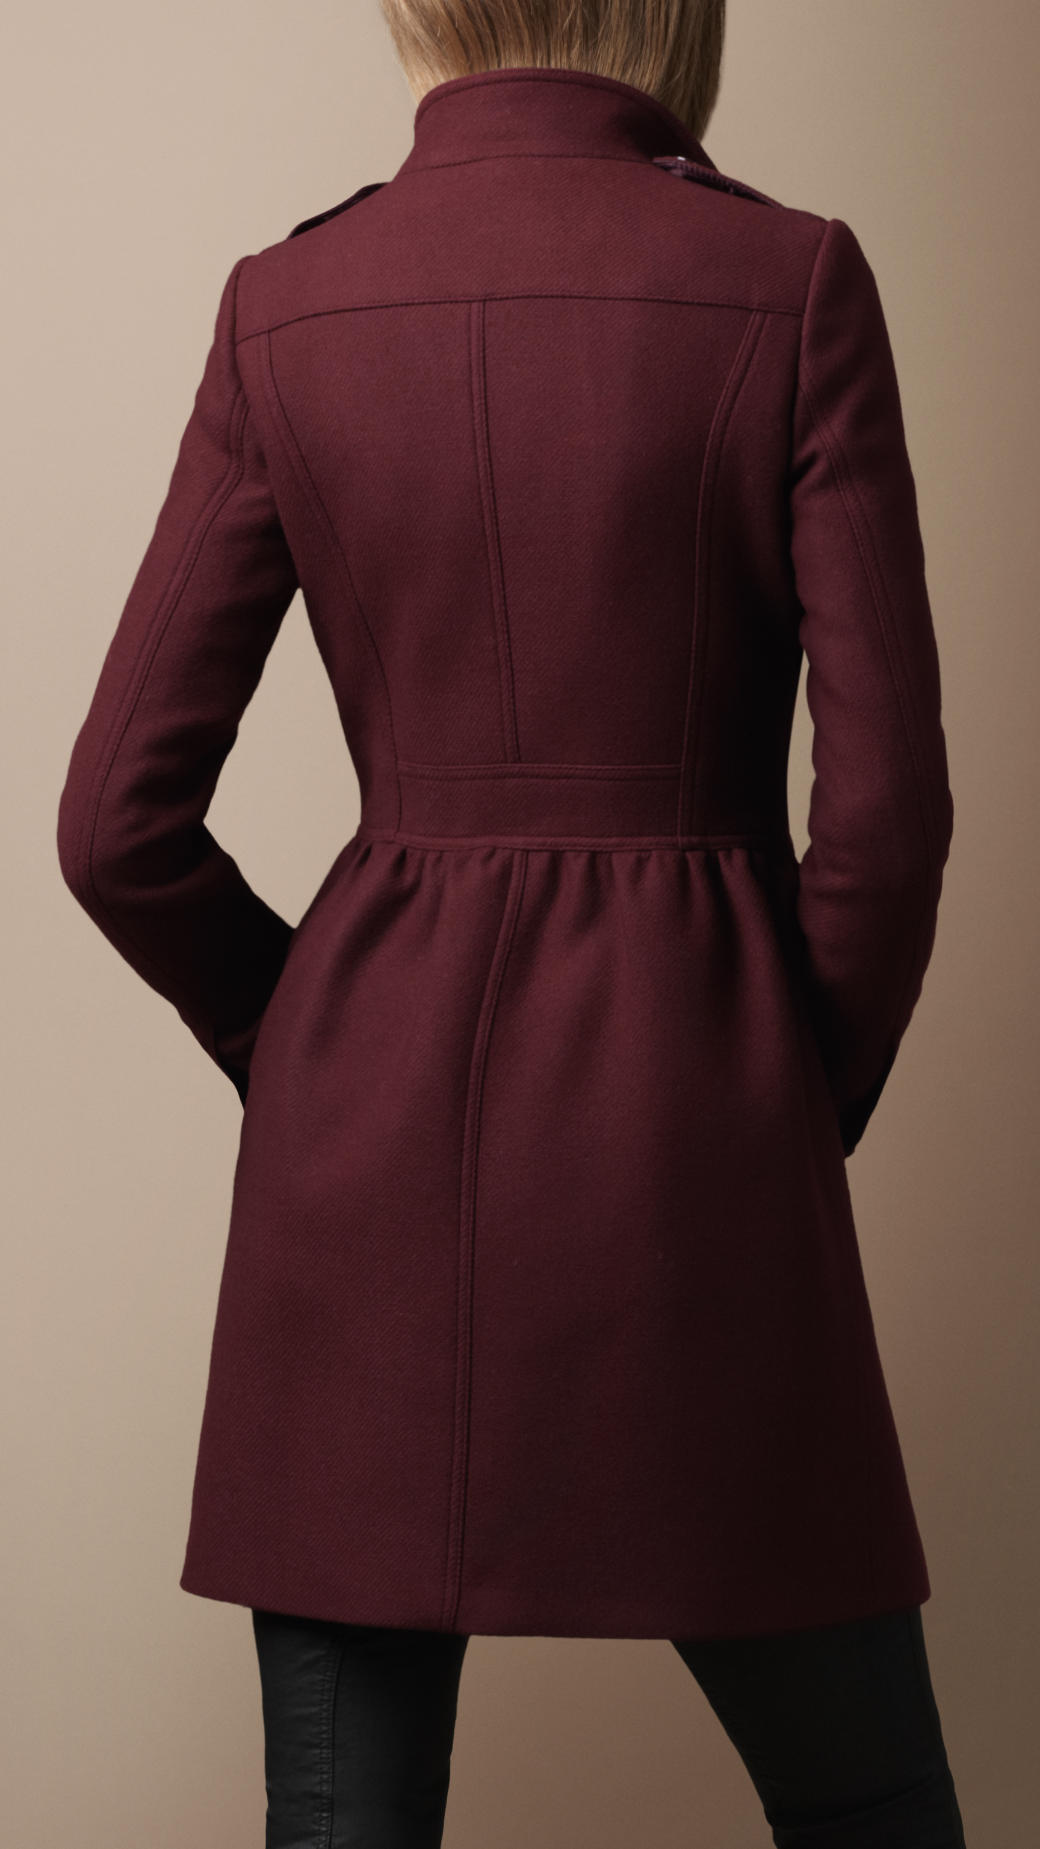 Lyst - Burberry Brit Wool Twill Dress Coat in Red